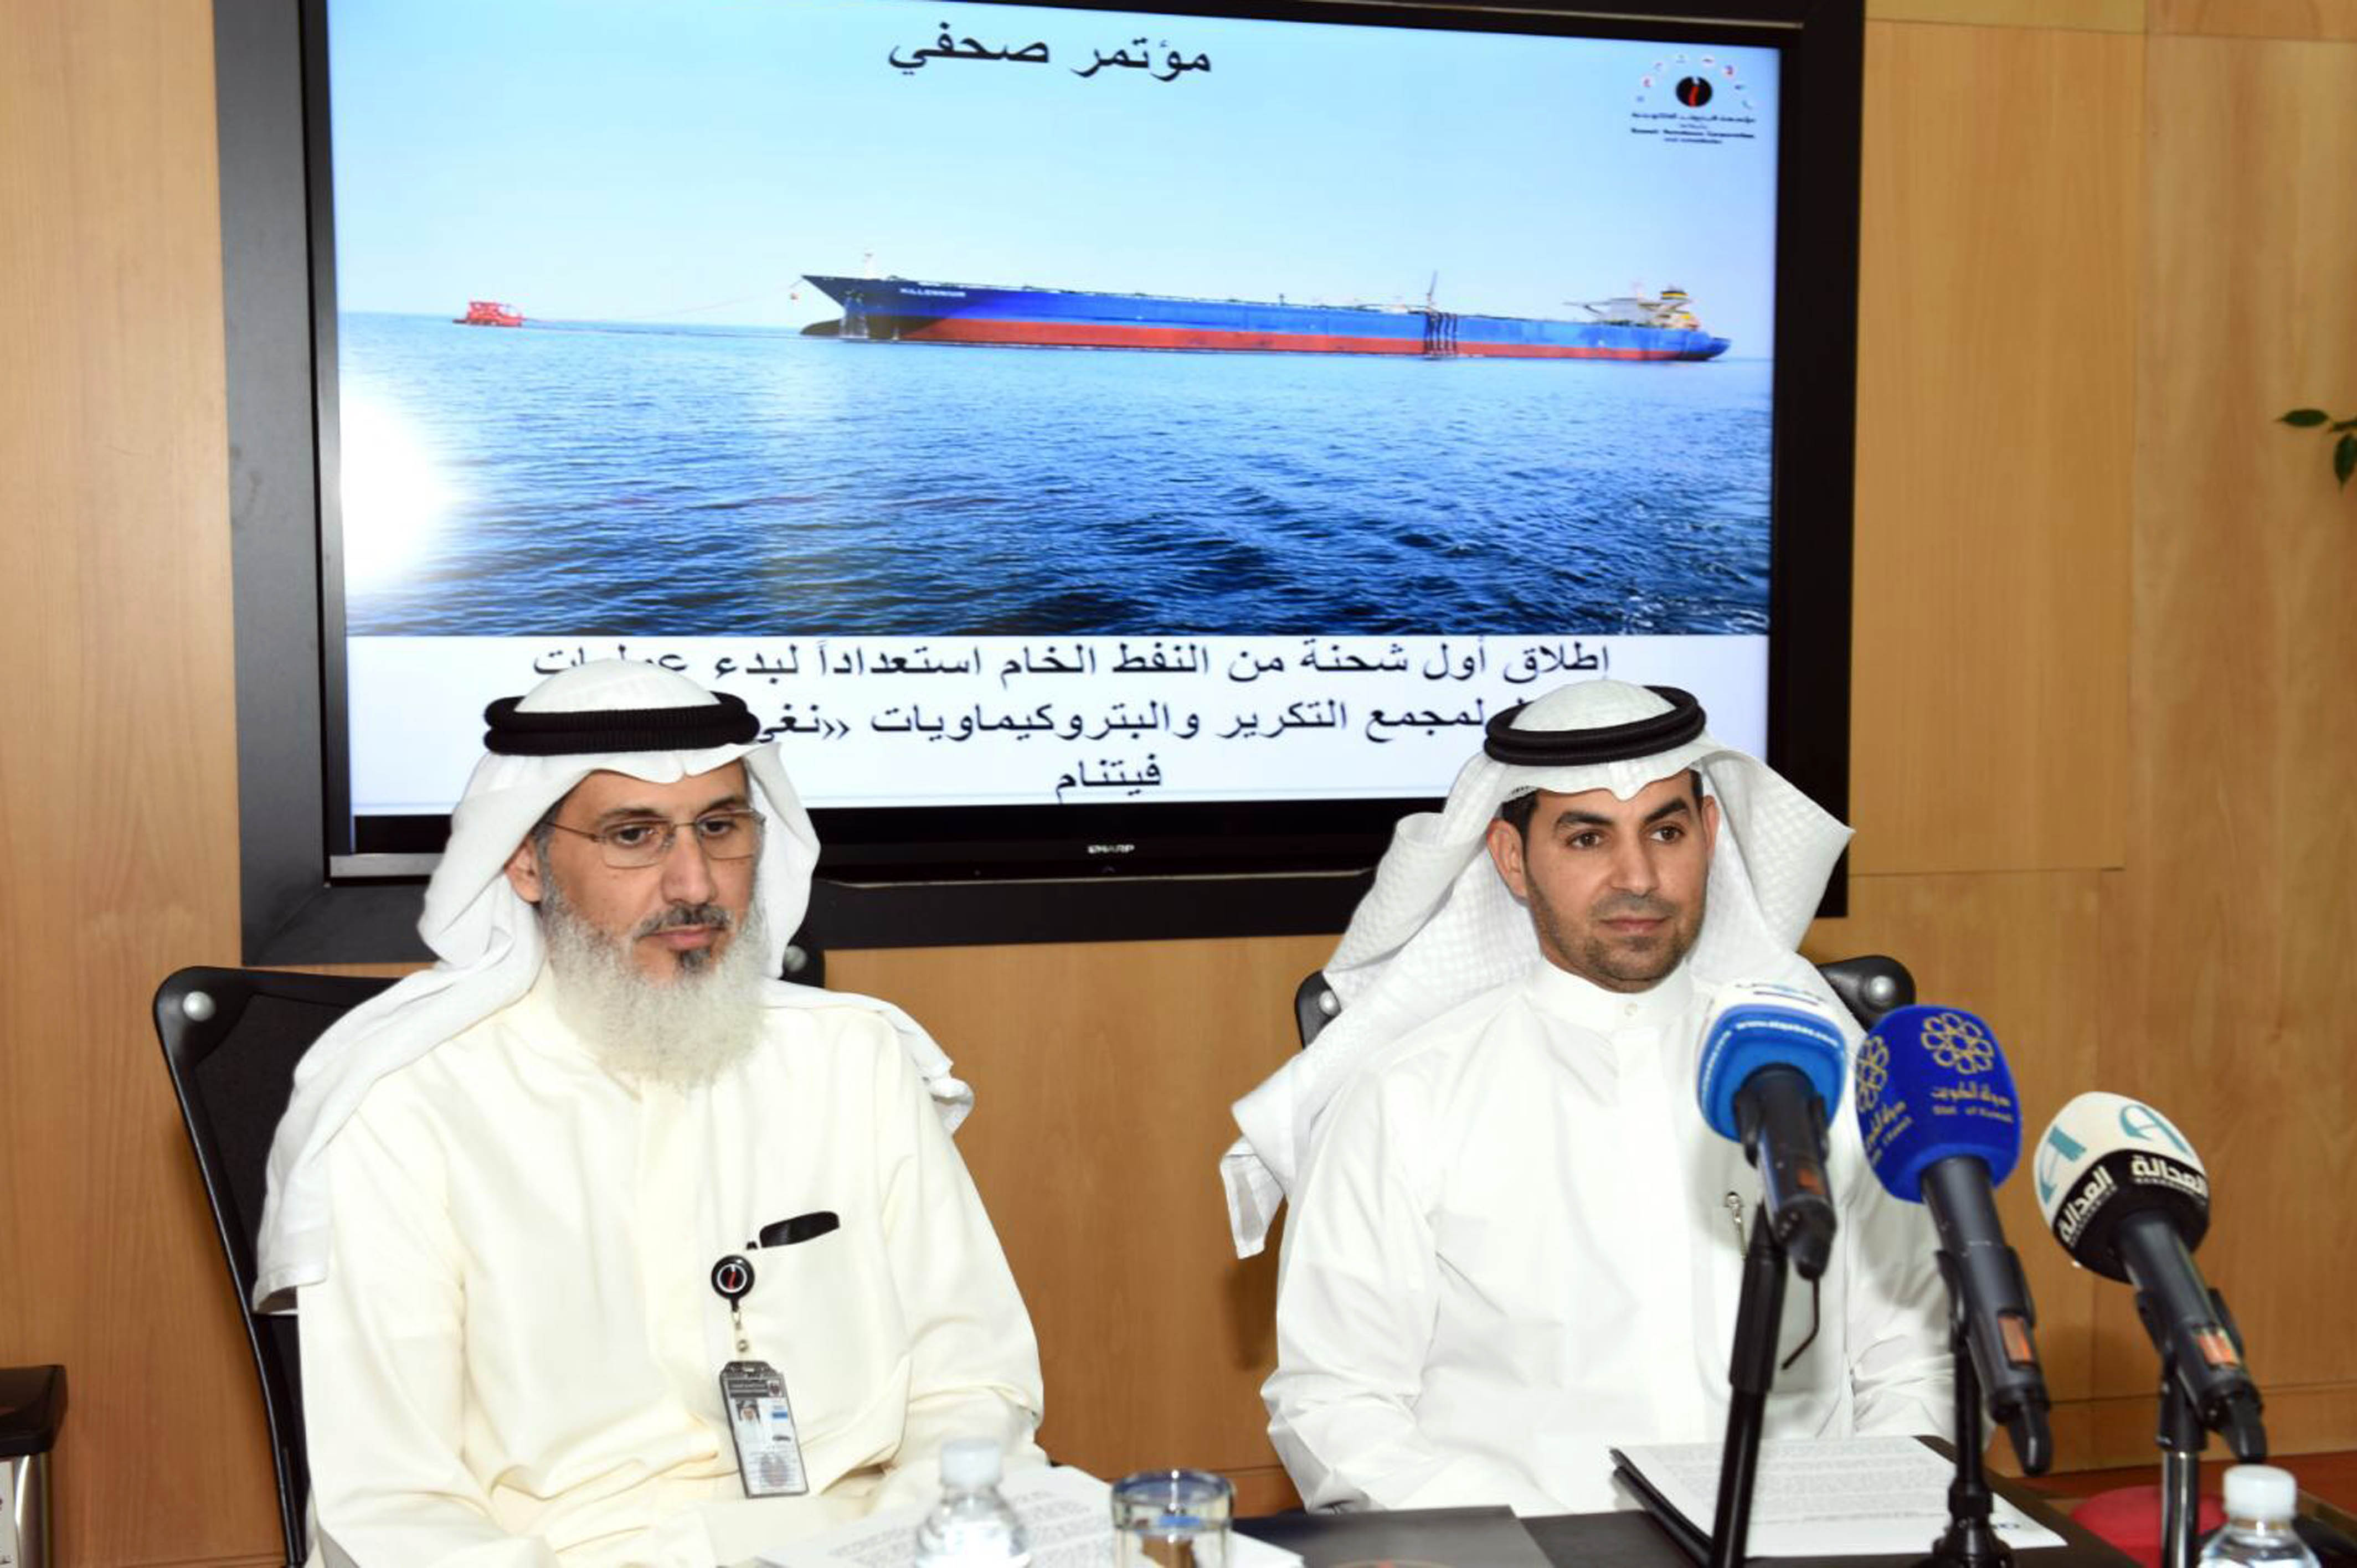 Kuwait Petroleum International's (KPI) Vice President Ghanem Al-Otaibi during the press conference